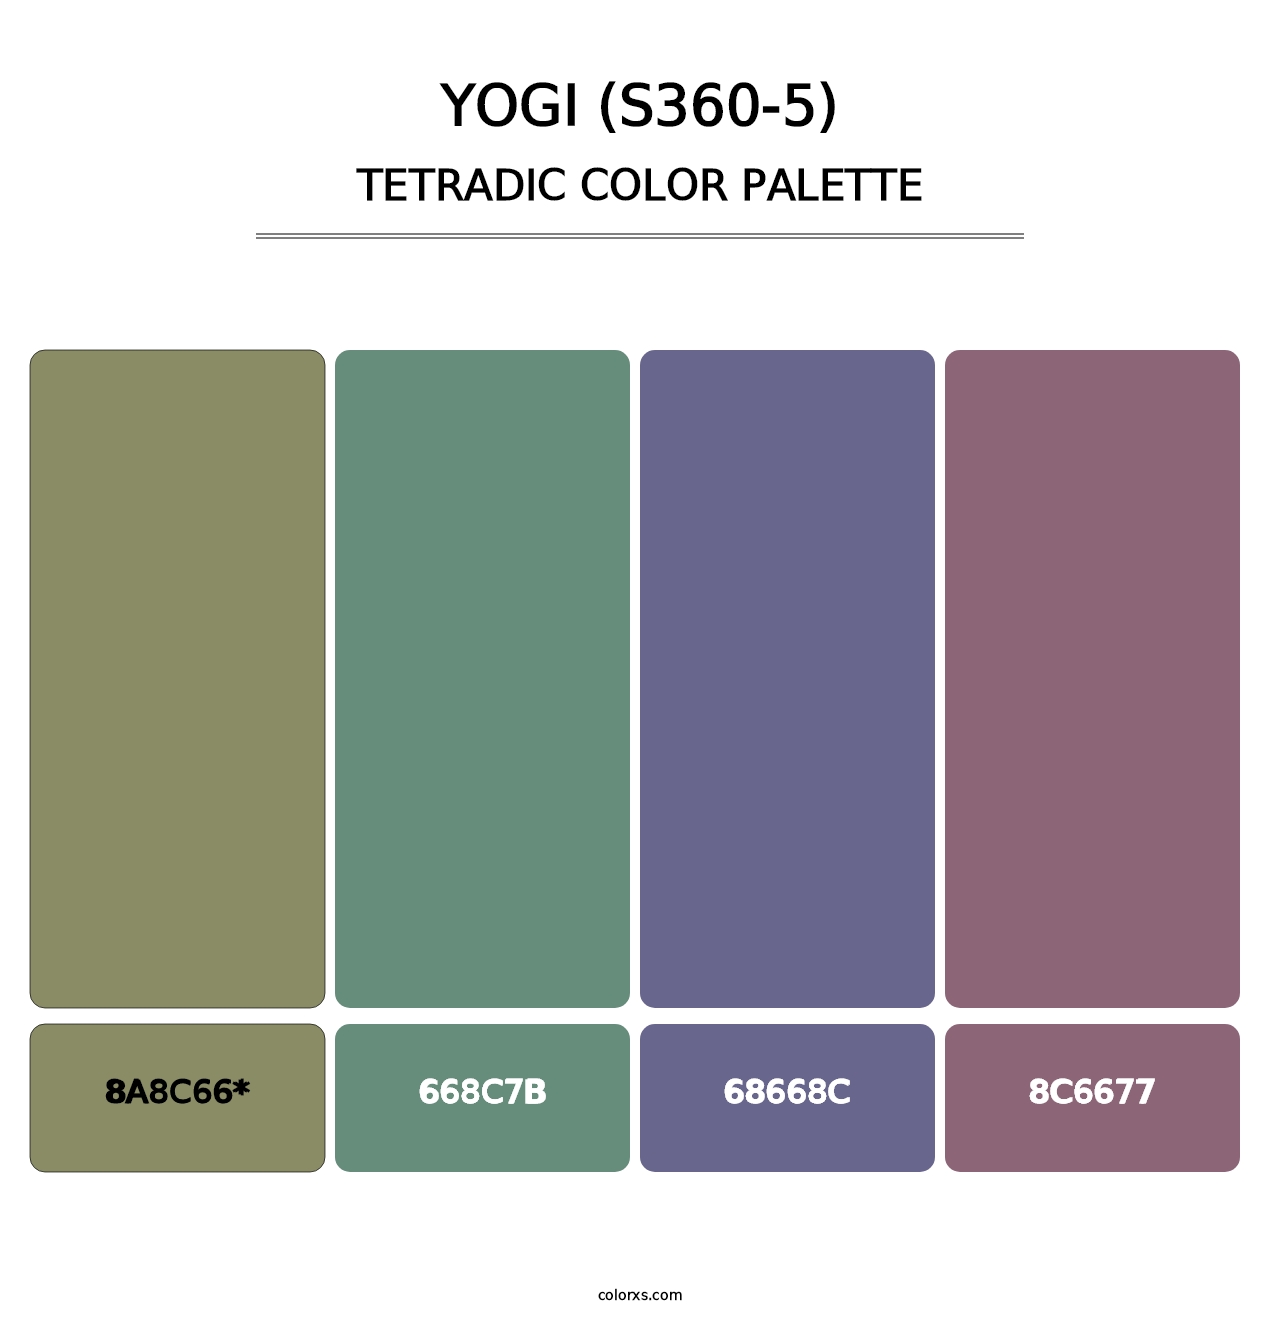 Yogi (S360-5) - Tetradic Color Palette